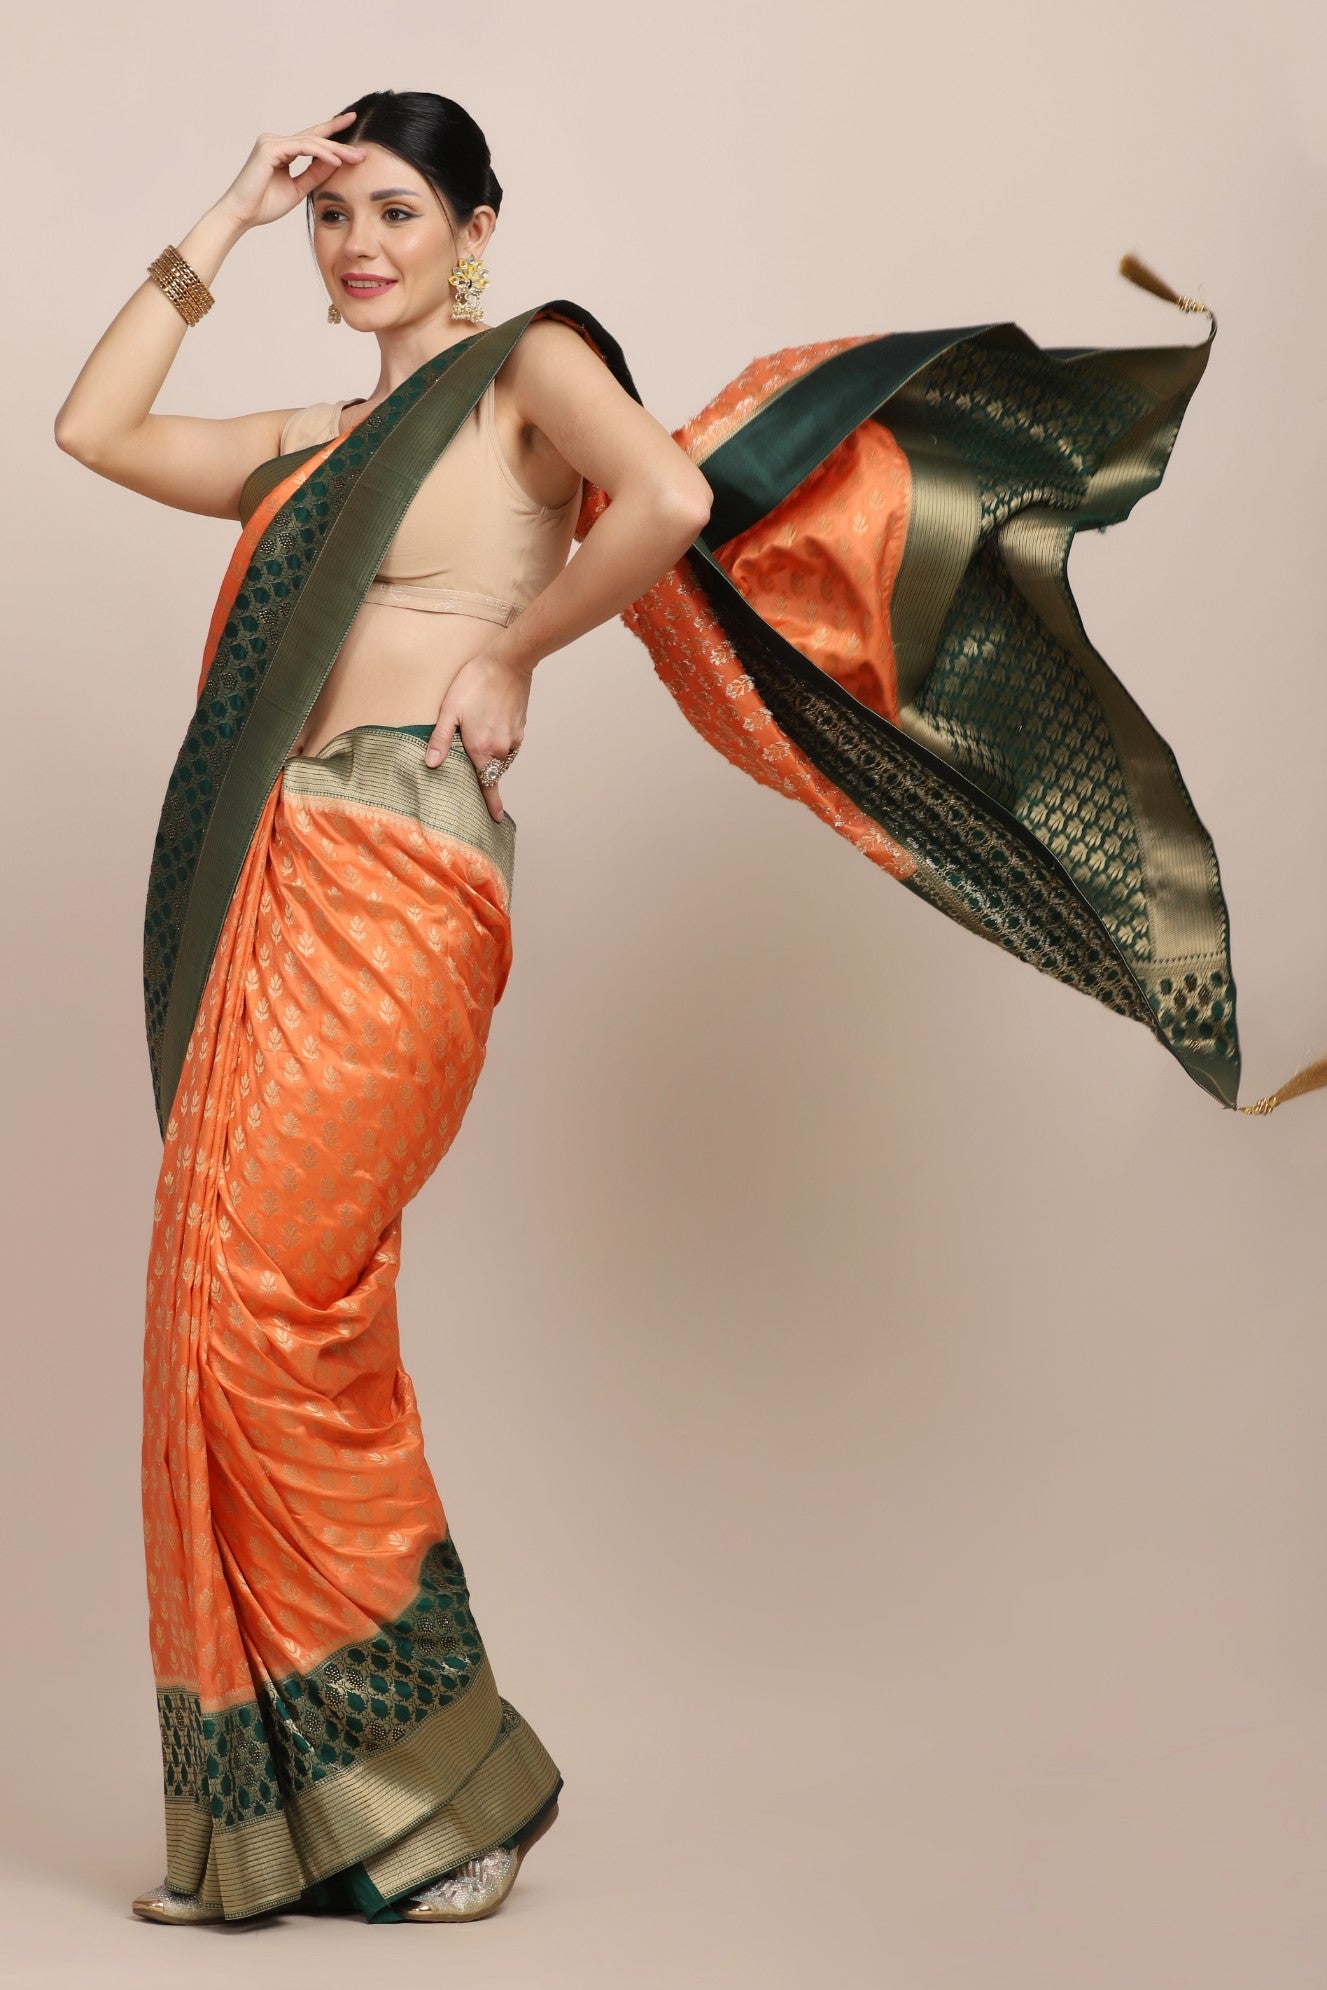 Classy orange color floral motif woven saree